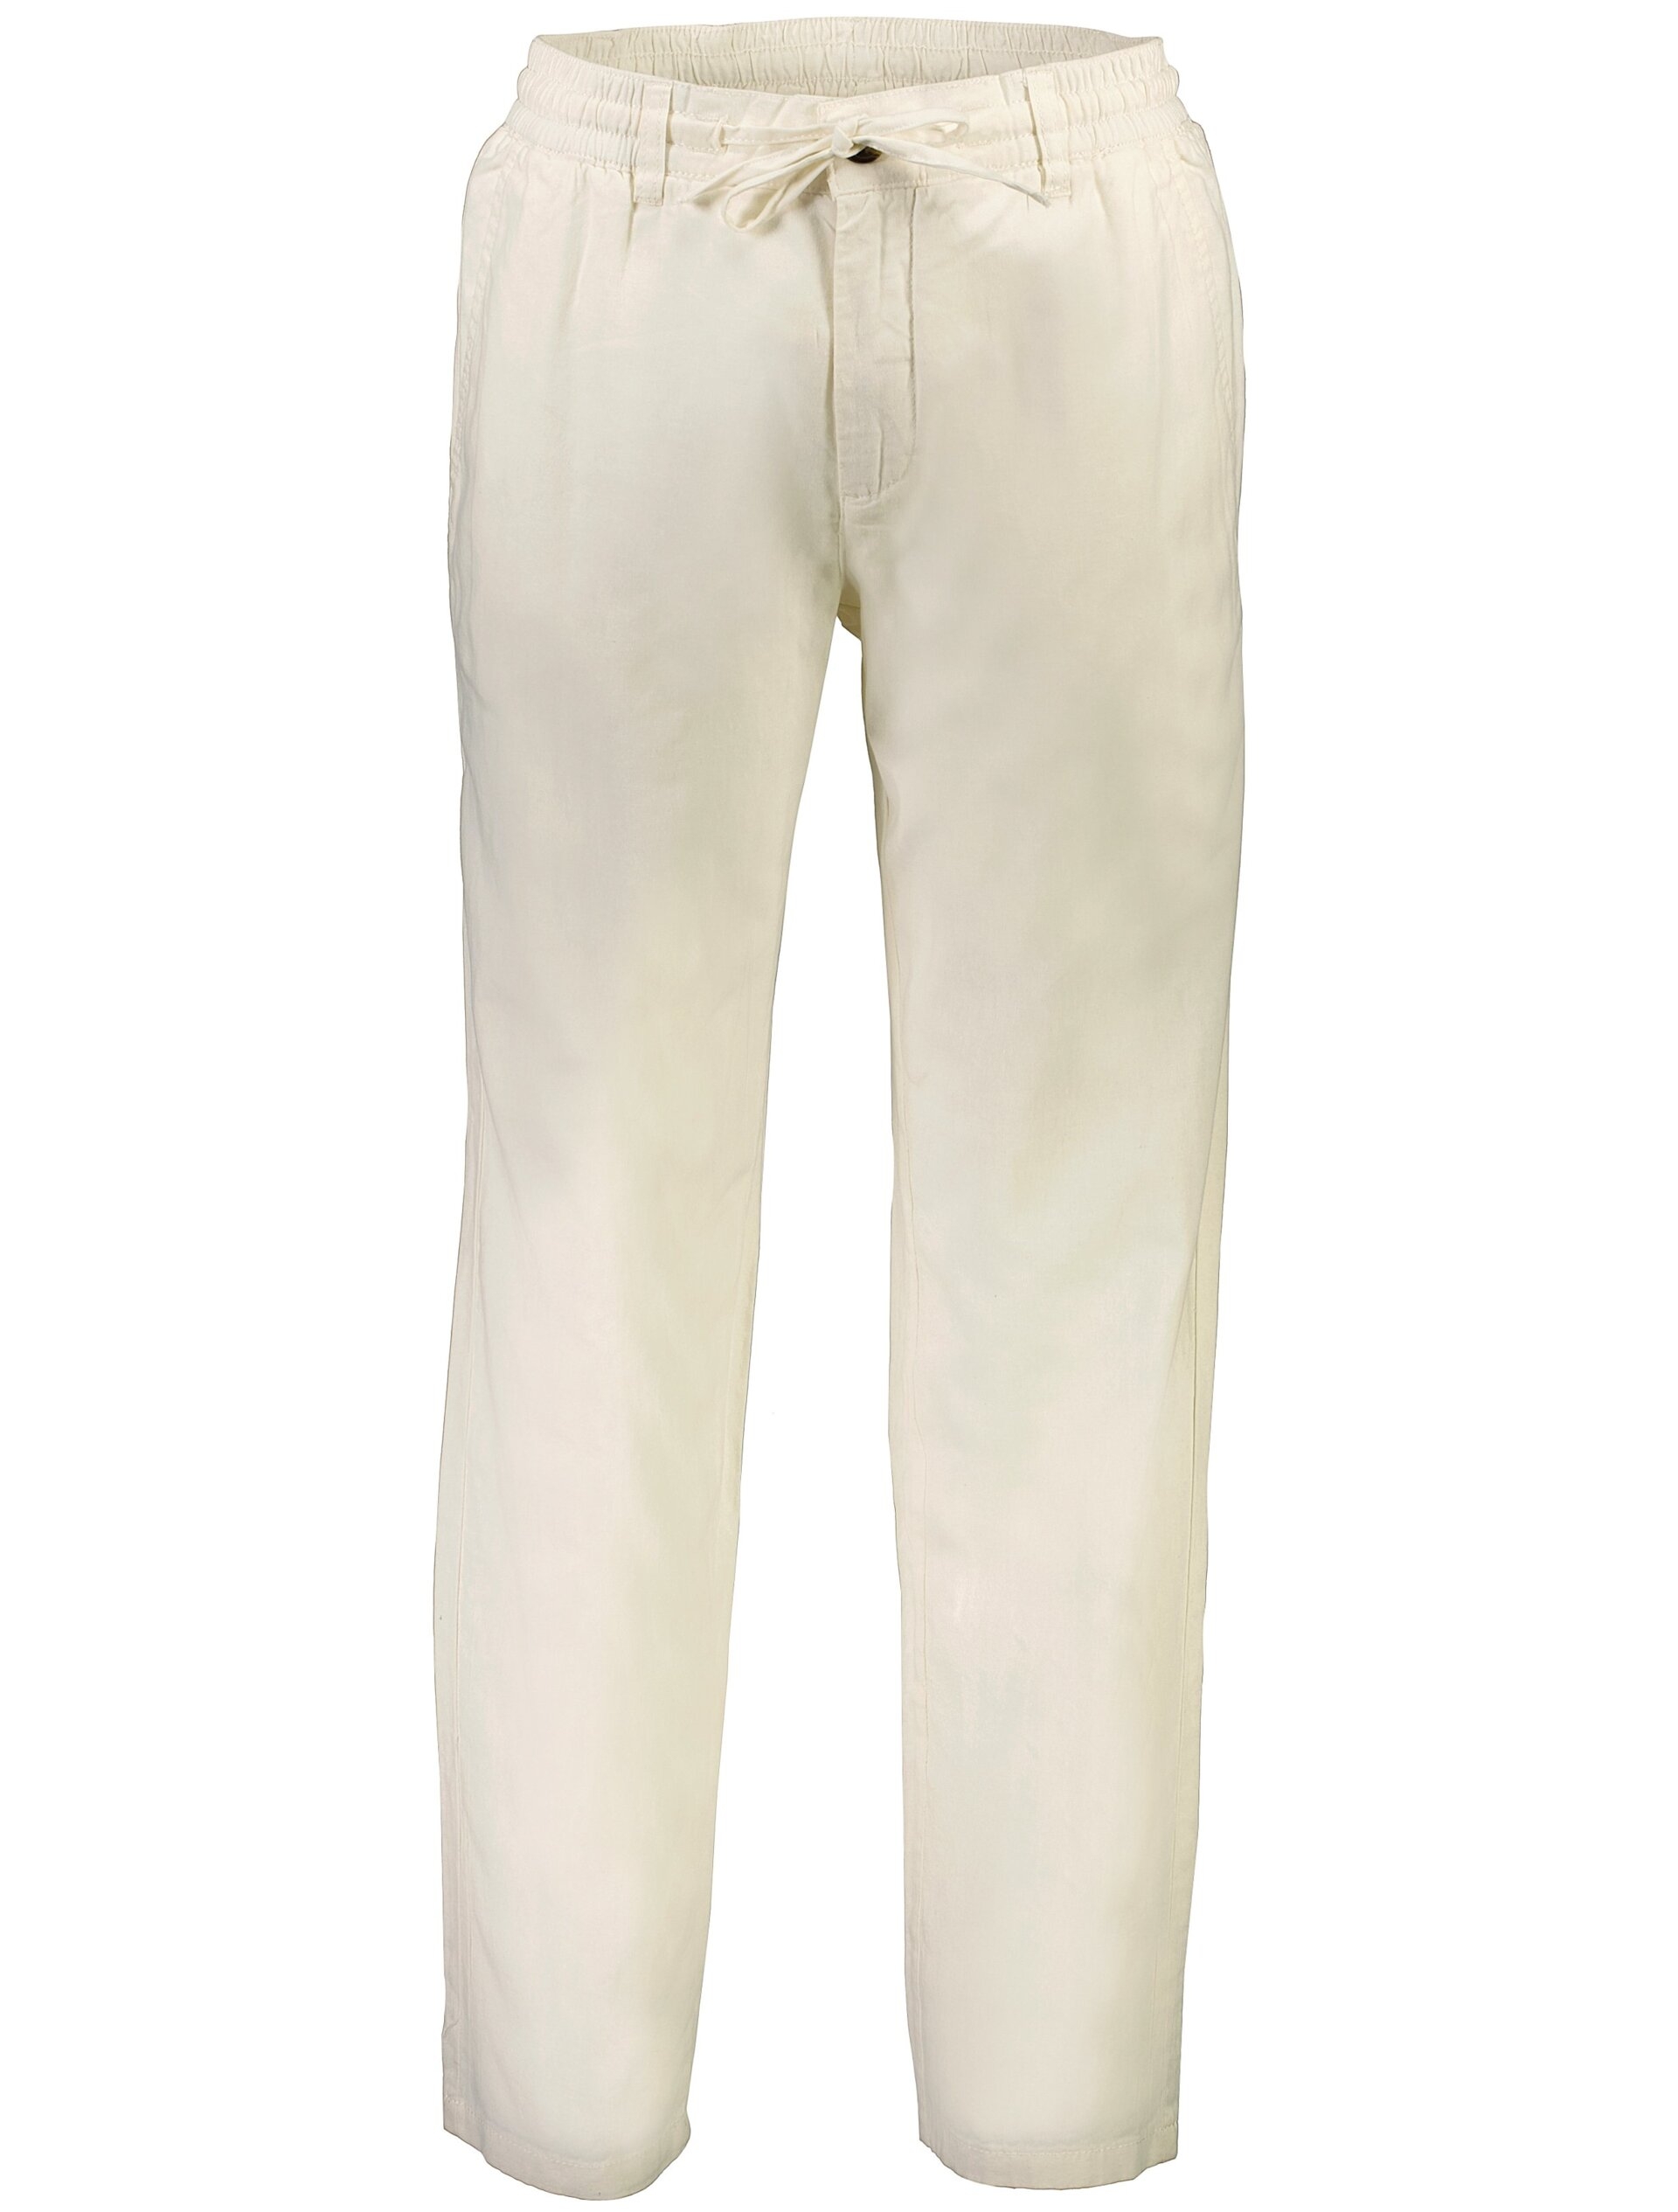 Lindbergh Linen pants white / off white